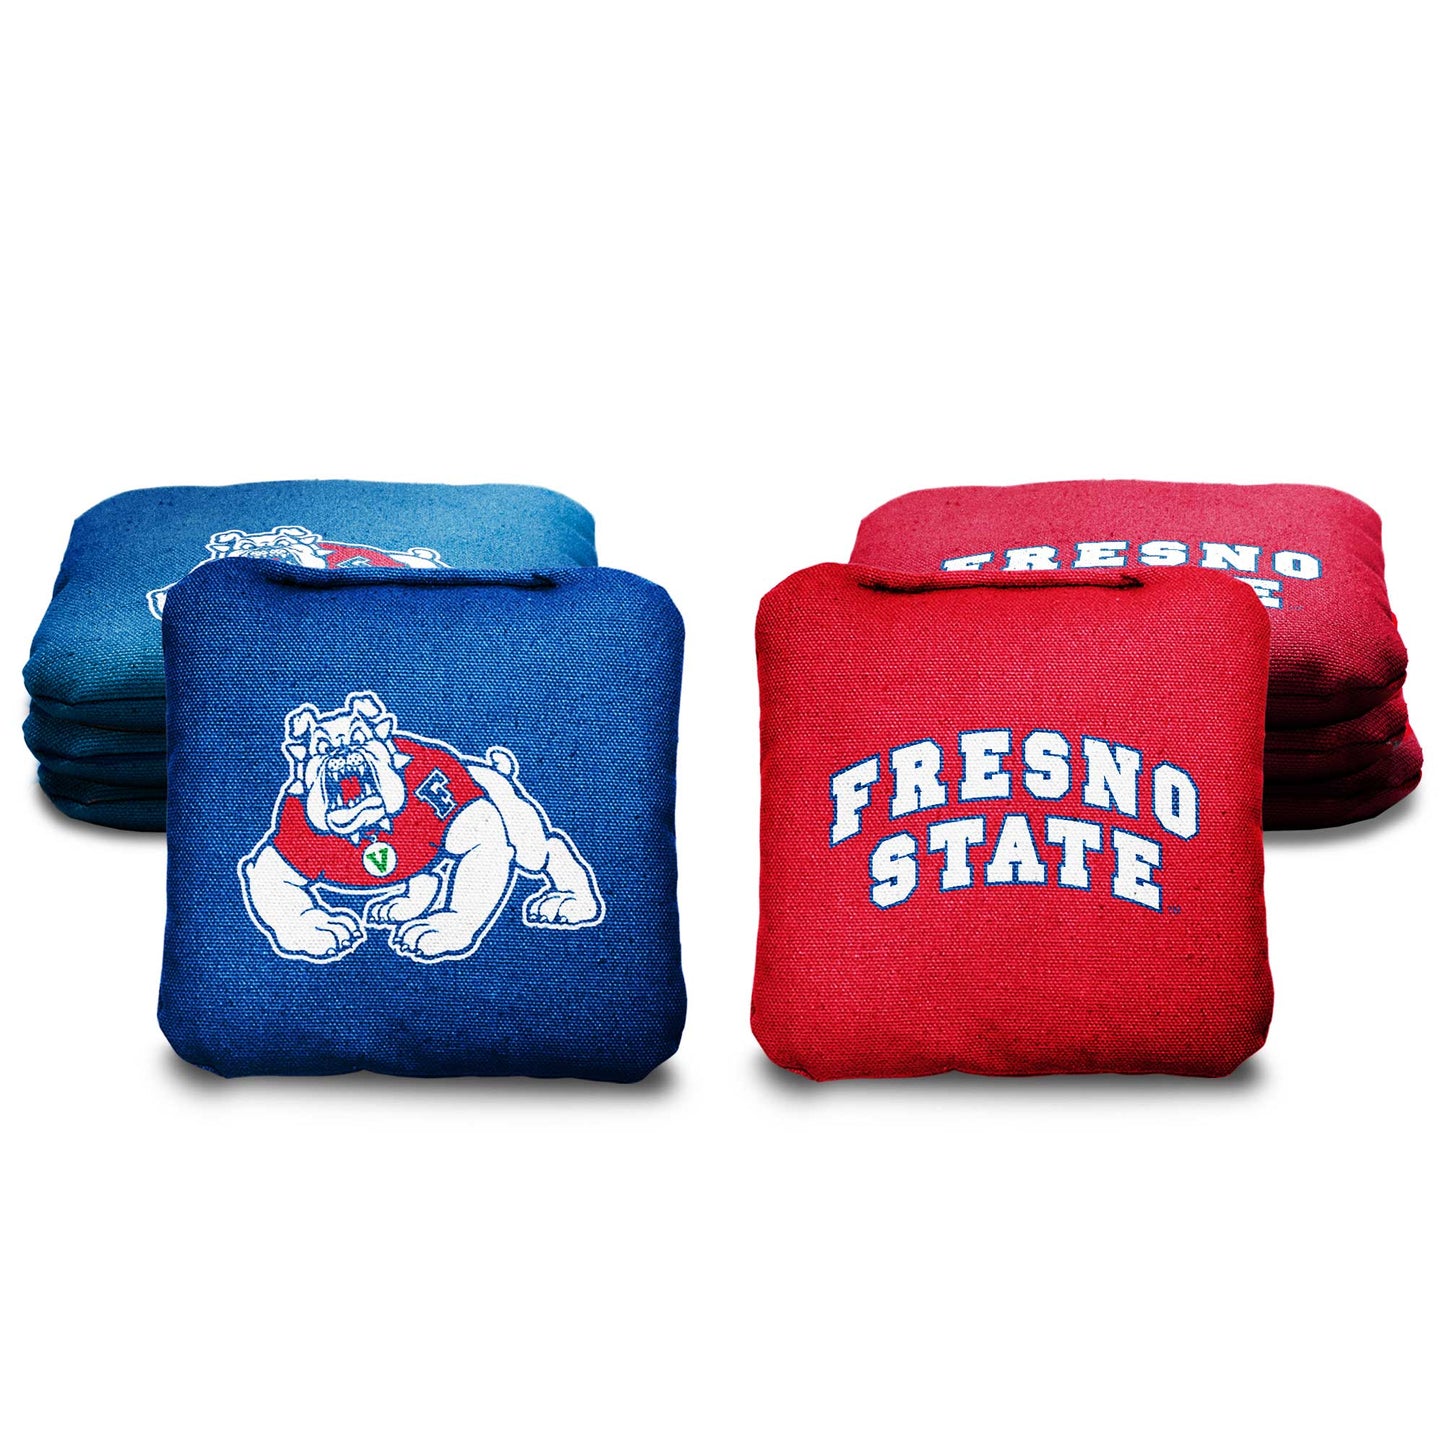 Fresno State University Cornhole Bags - 8 Cornhole Bags